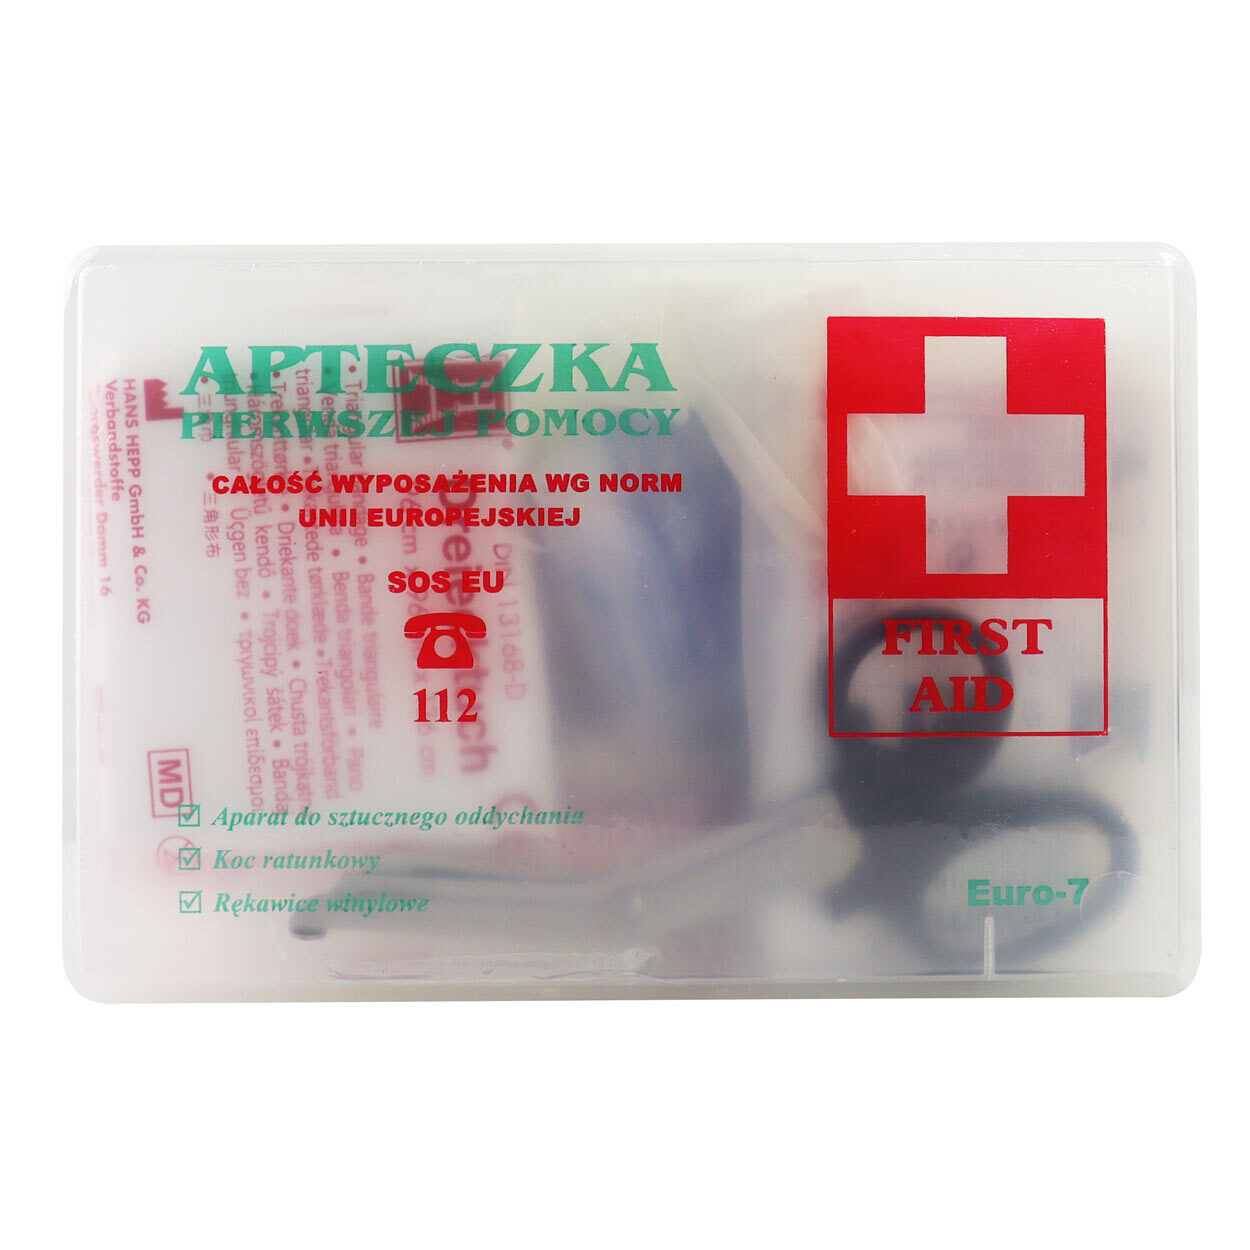 First aid kit TYP B Euro